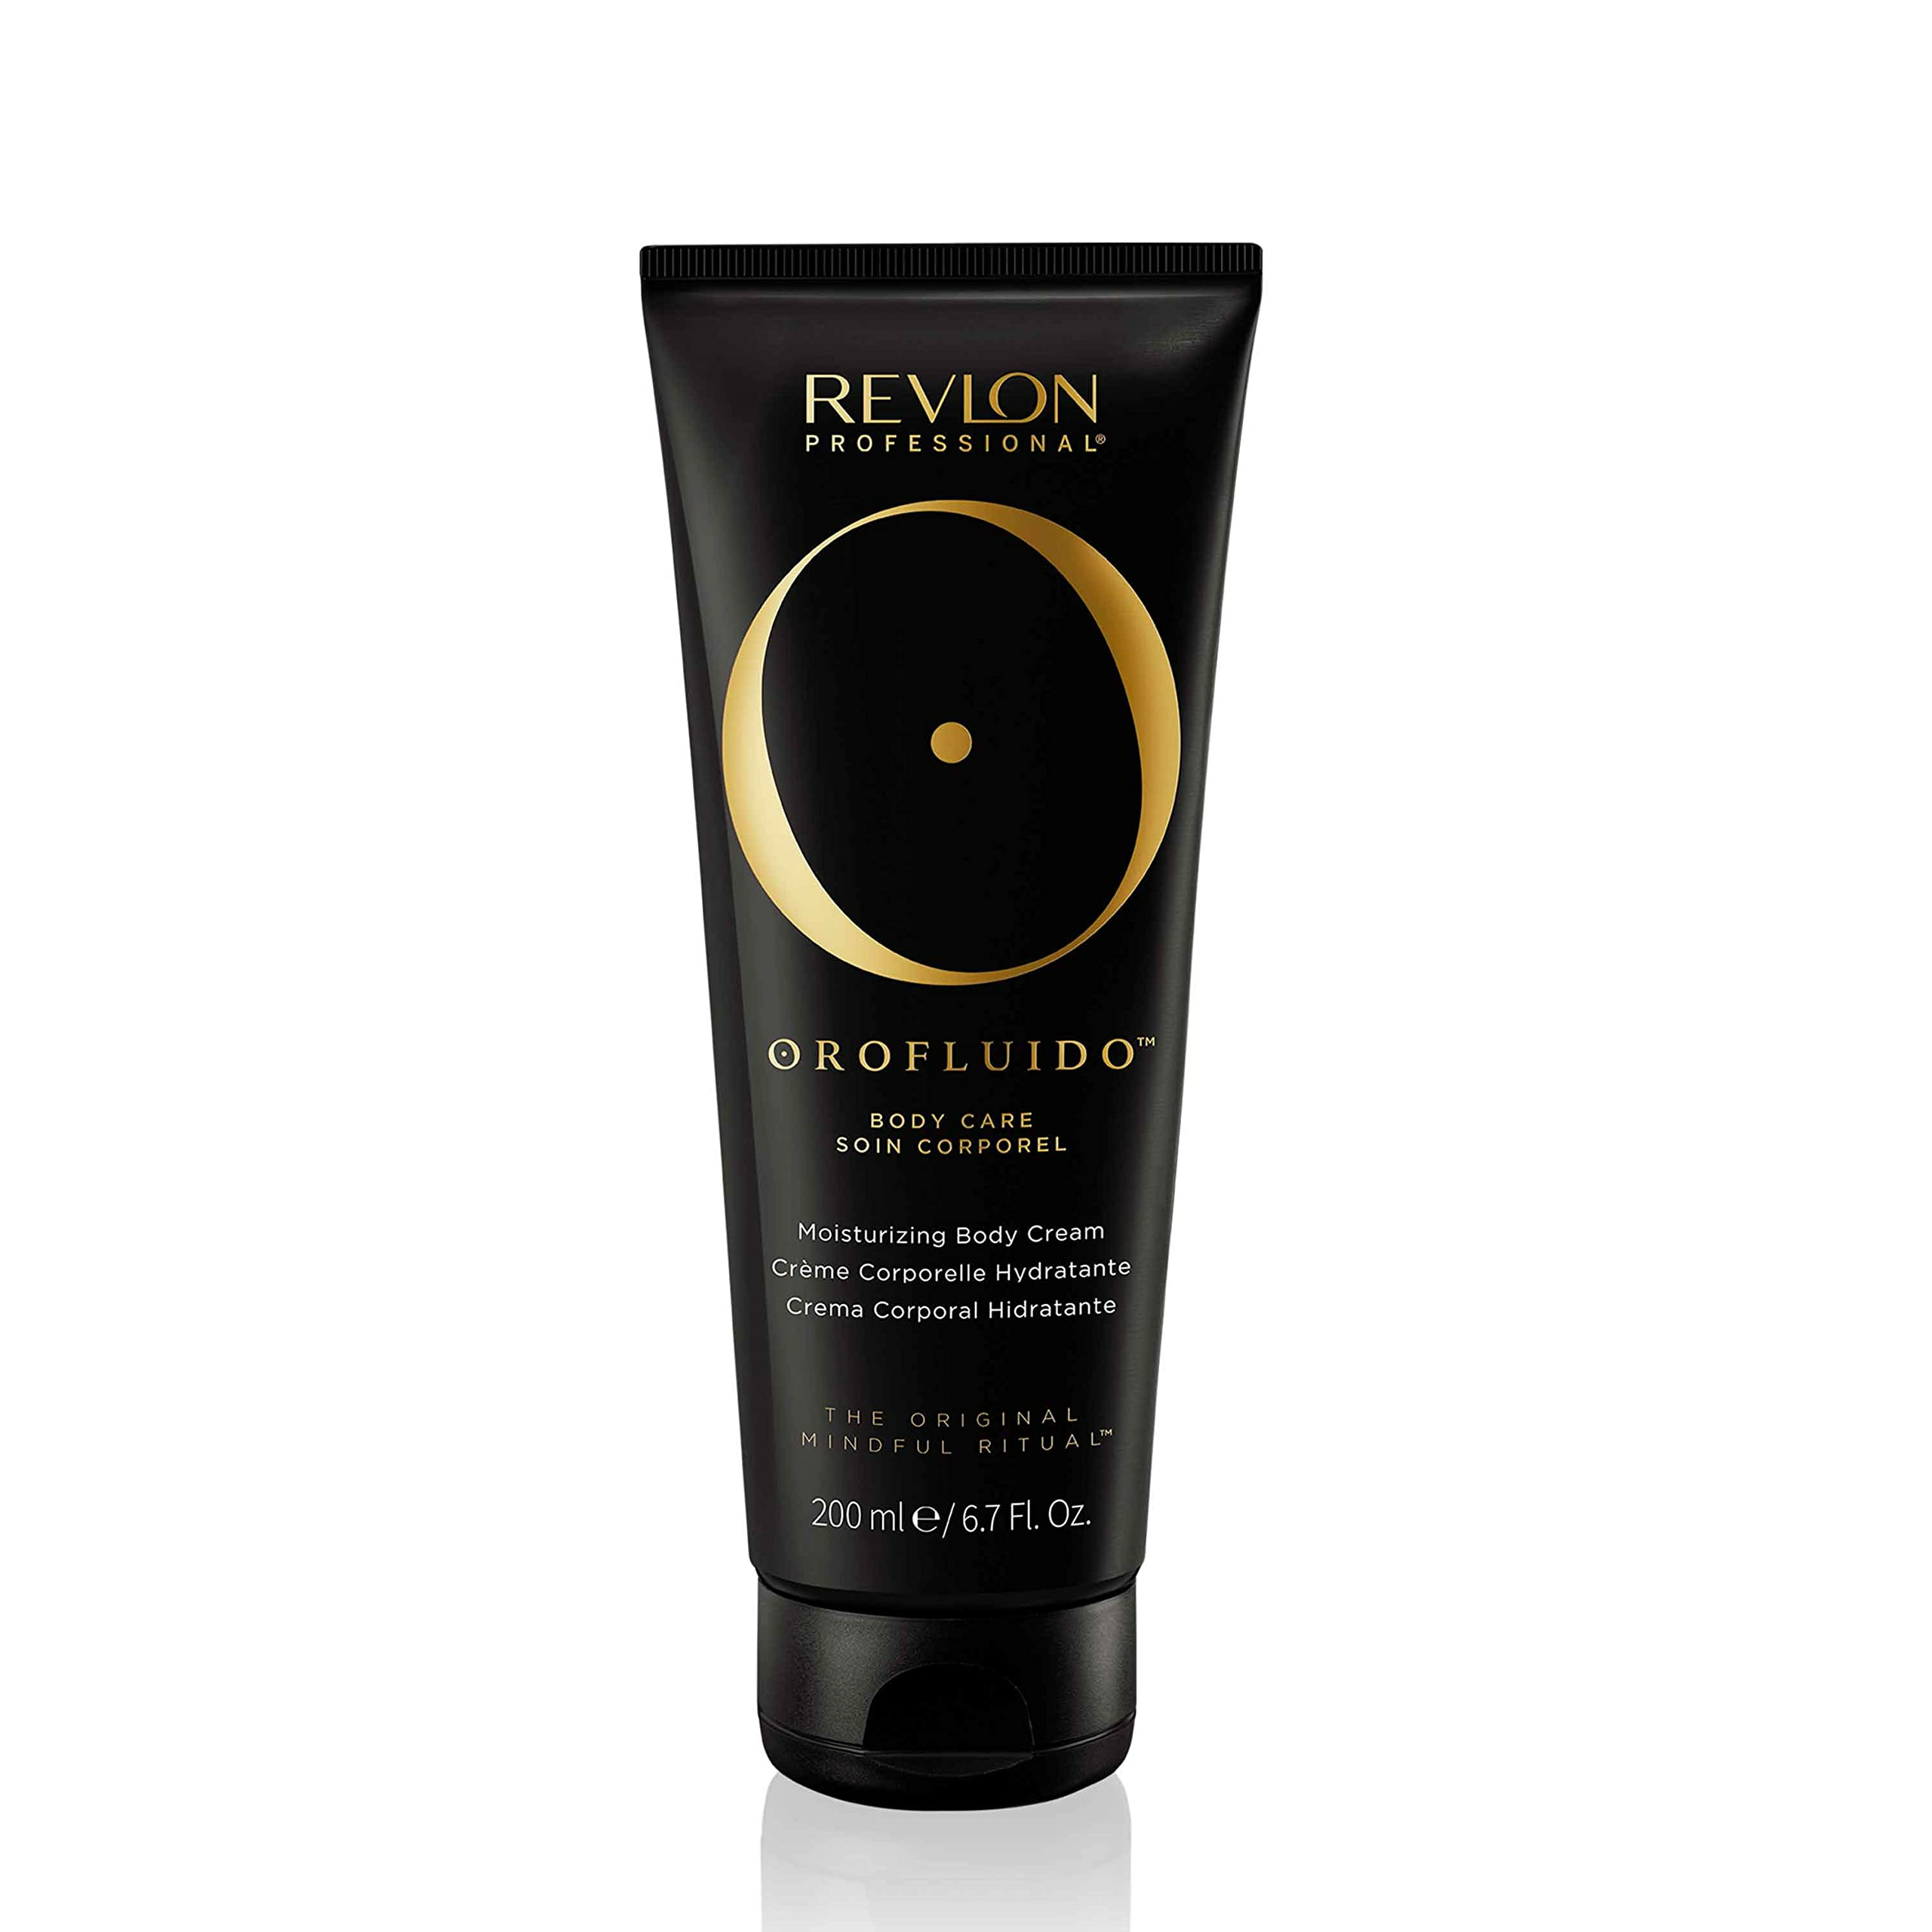 Revlon Orofluido Body Cream 200ml